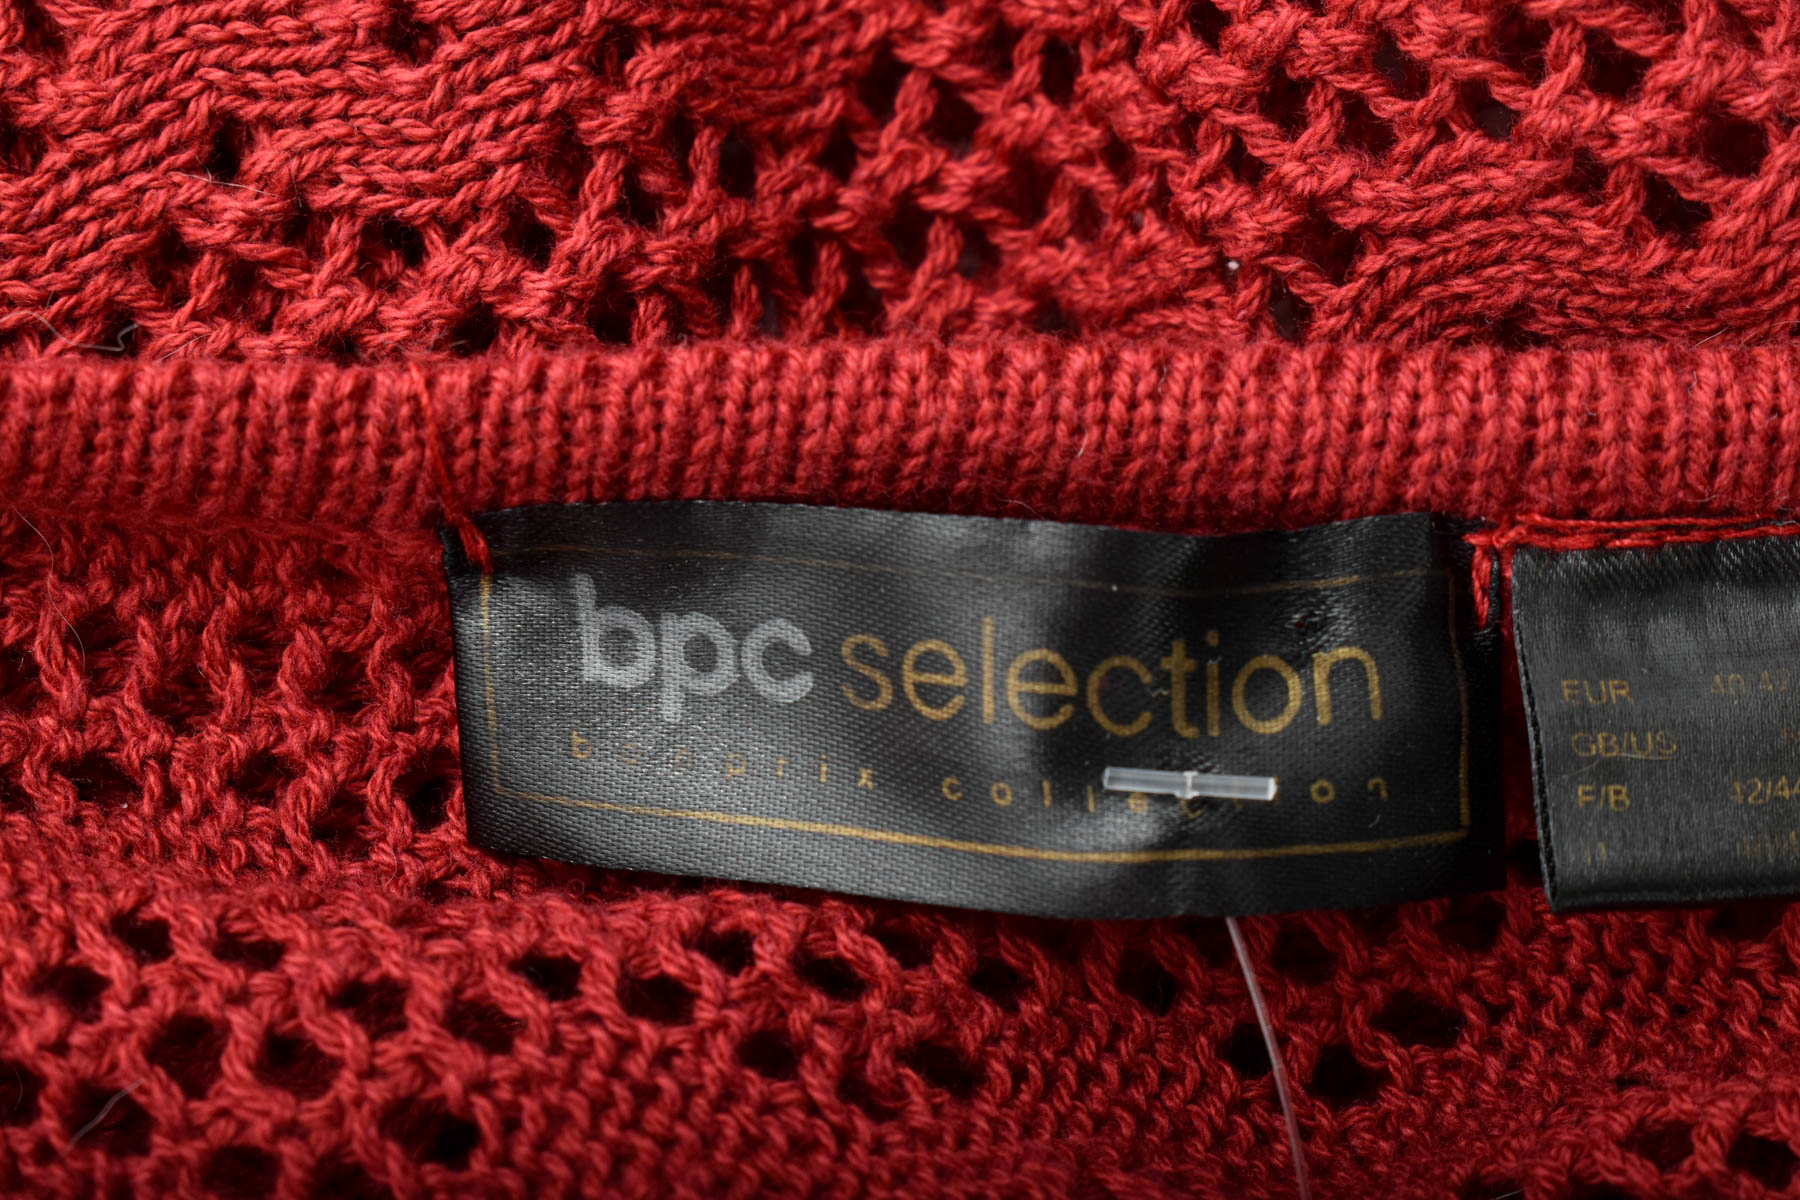 Дамски пуловер - Bpc selection bonprix collection - 2